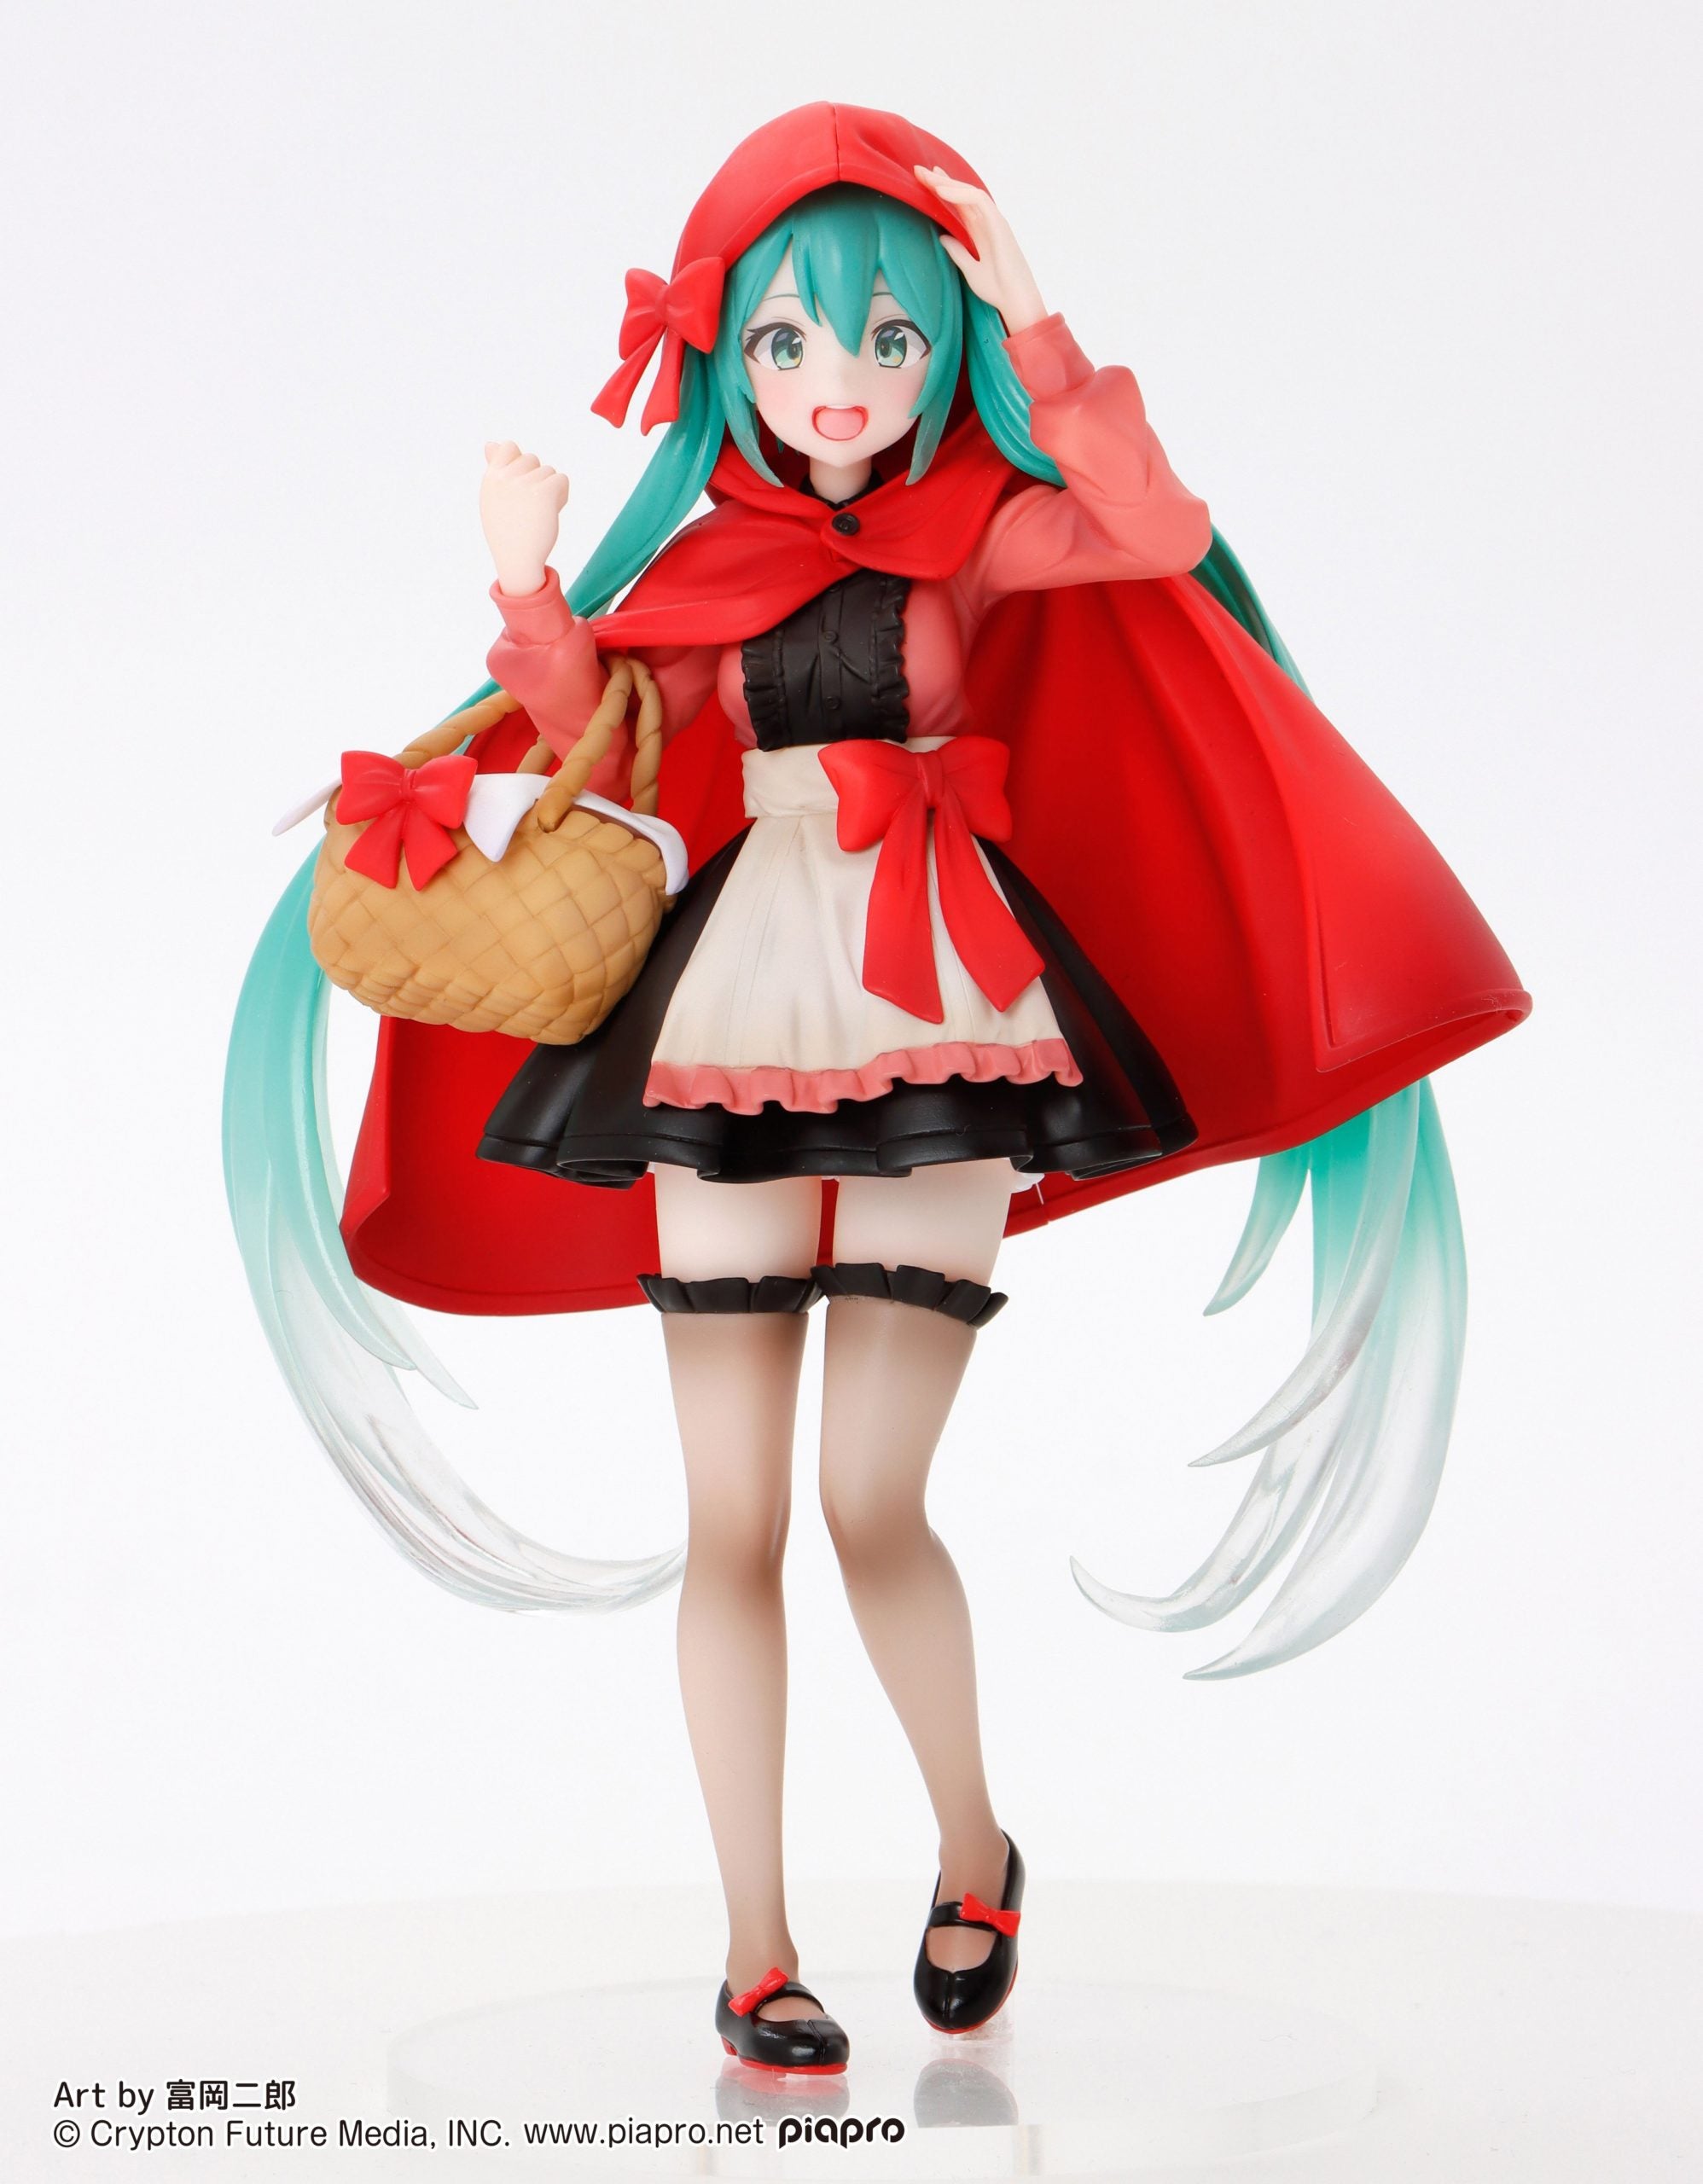 Vocaloid Hatsune Miku (Red Riding Hood Ver.) Wonderland Figure